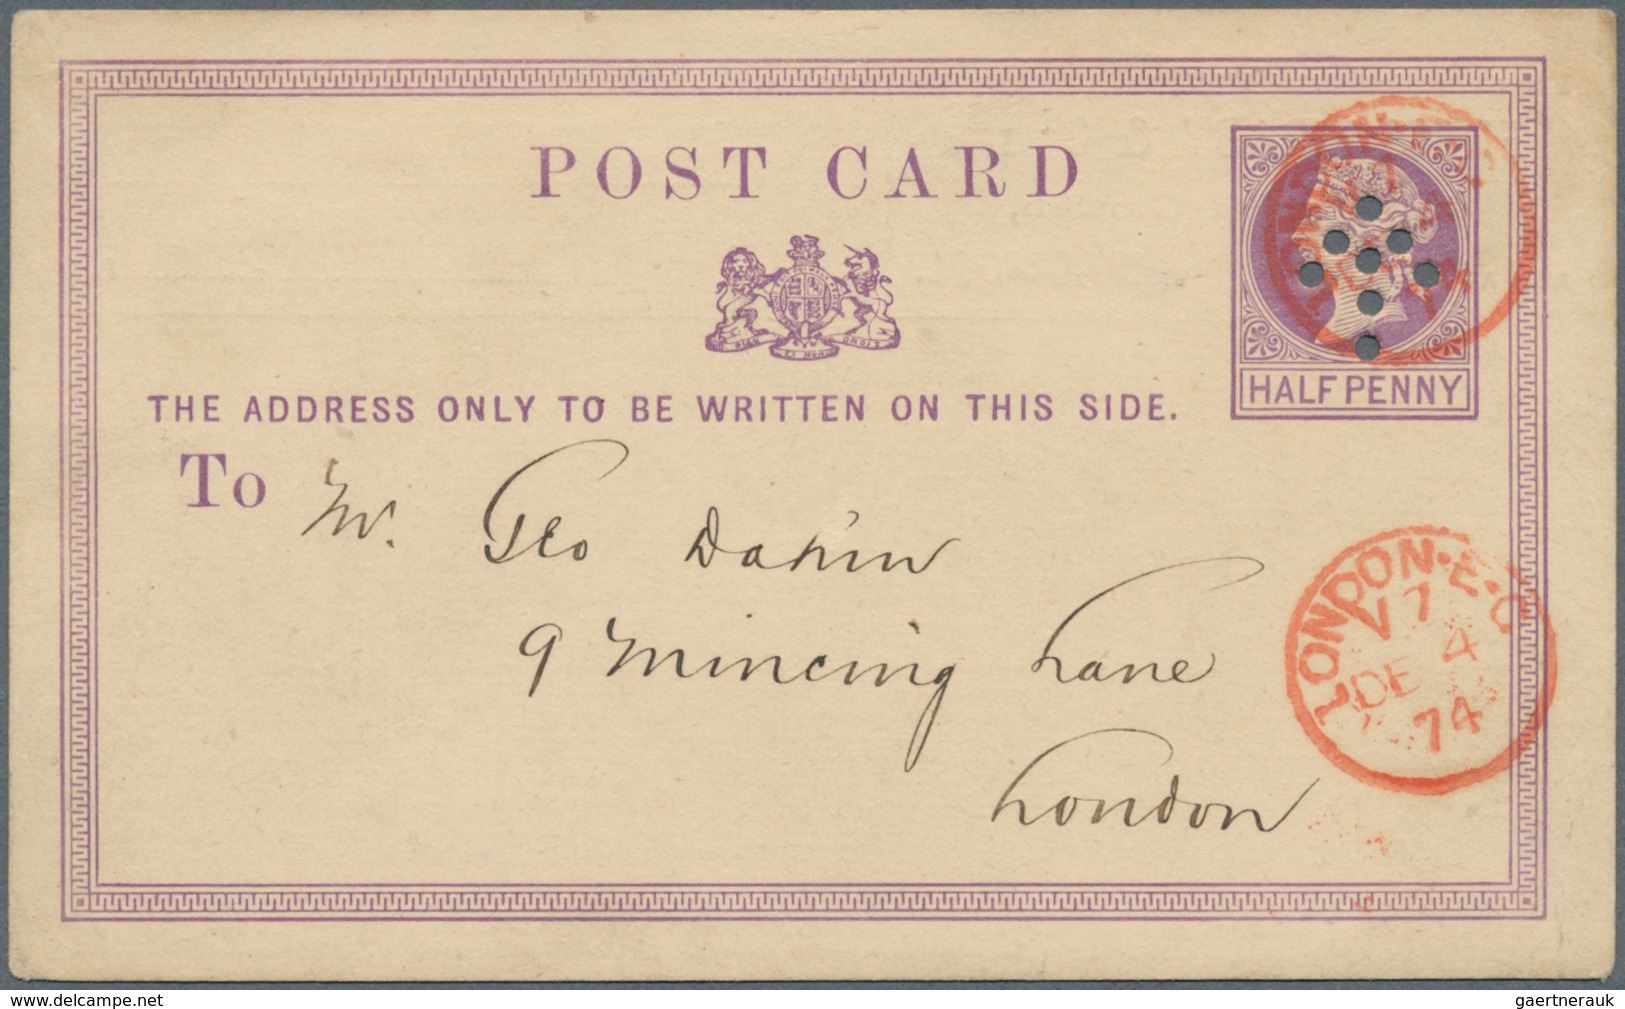 14265A Großbritannien - Ganzsachen: 1874, 1/2 D Violet QV Postal Stationery Card, Preprinted "Fred Braby & - 1840 Enveloppes Mulready